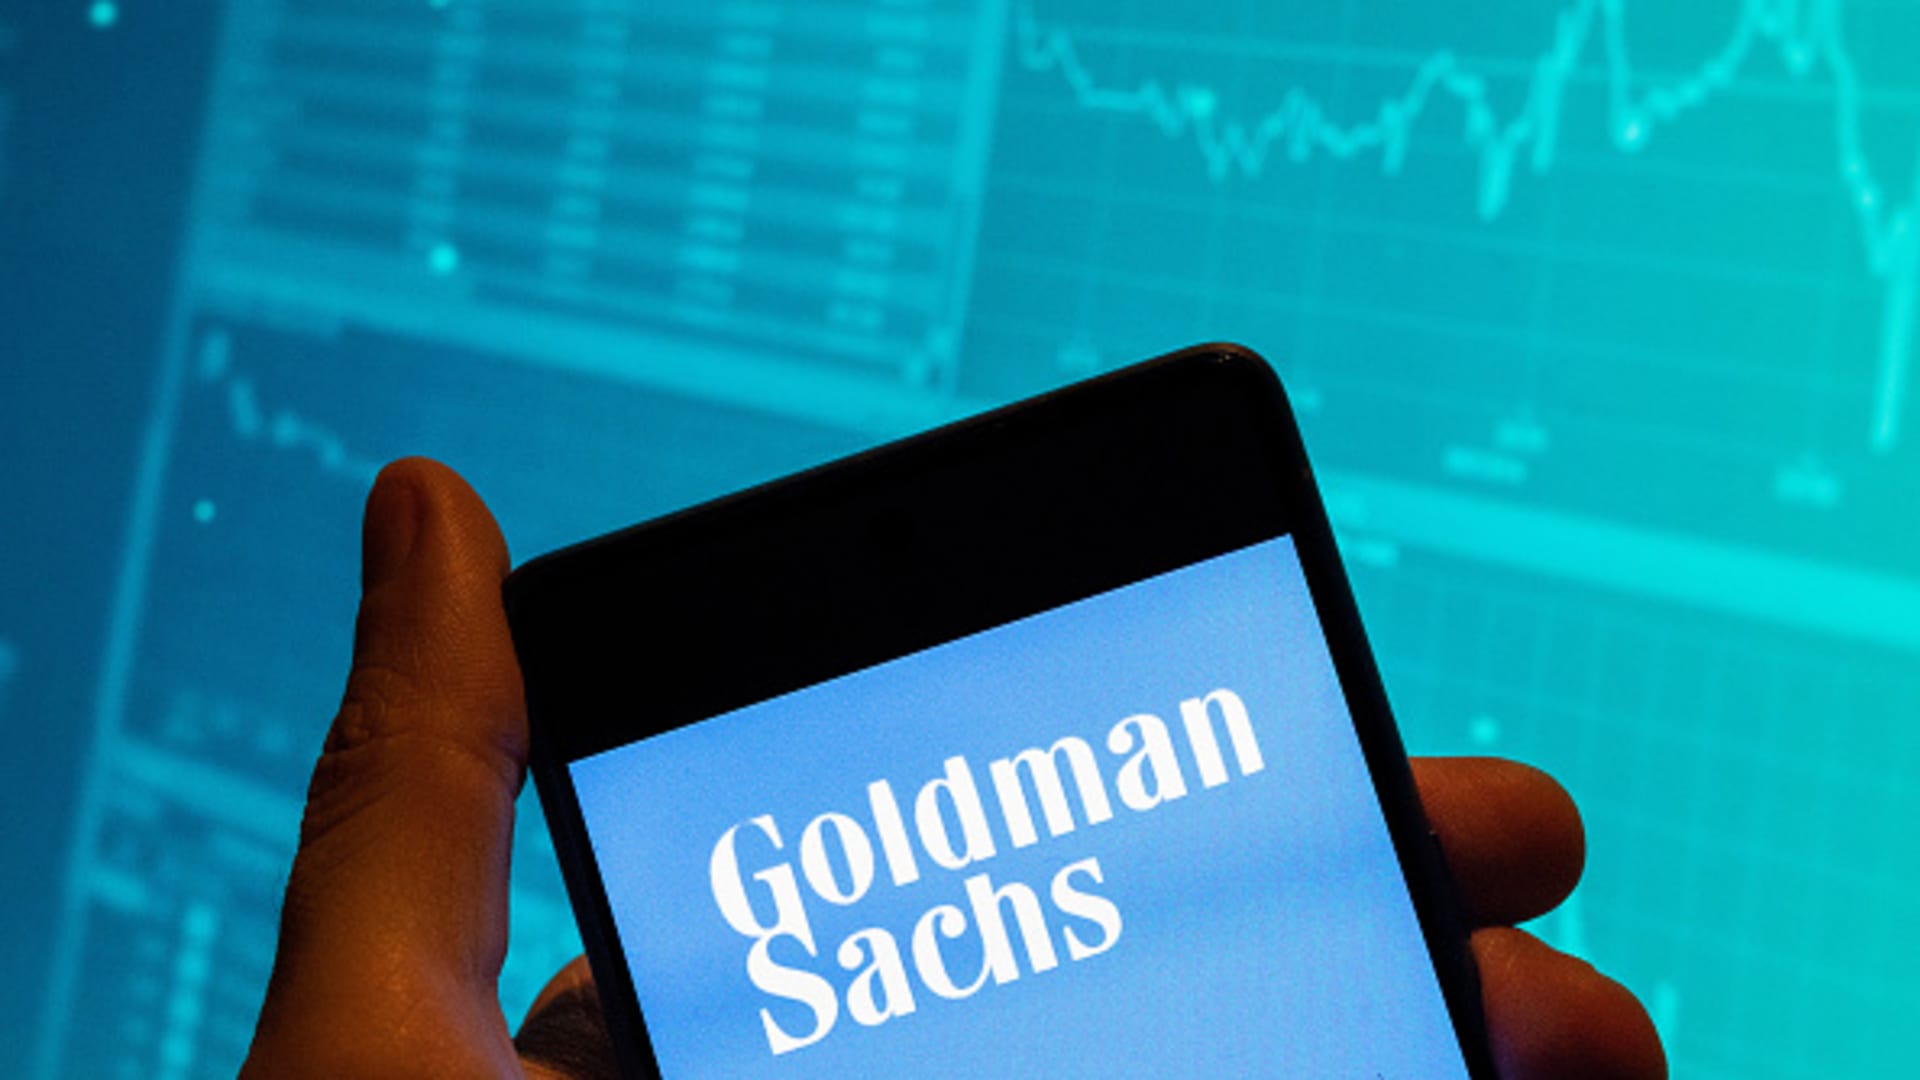 The Goldman Sachs logo displayed on a smartphone.